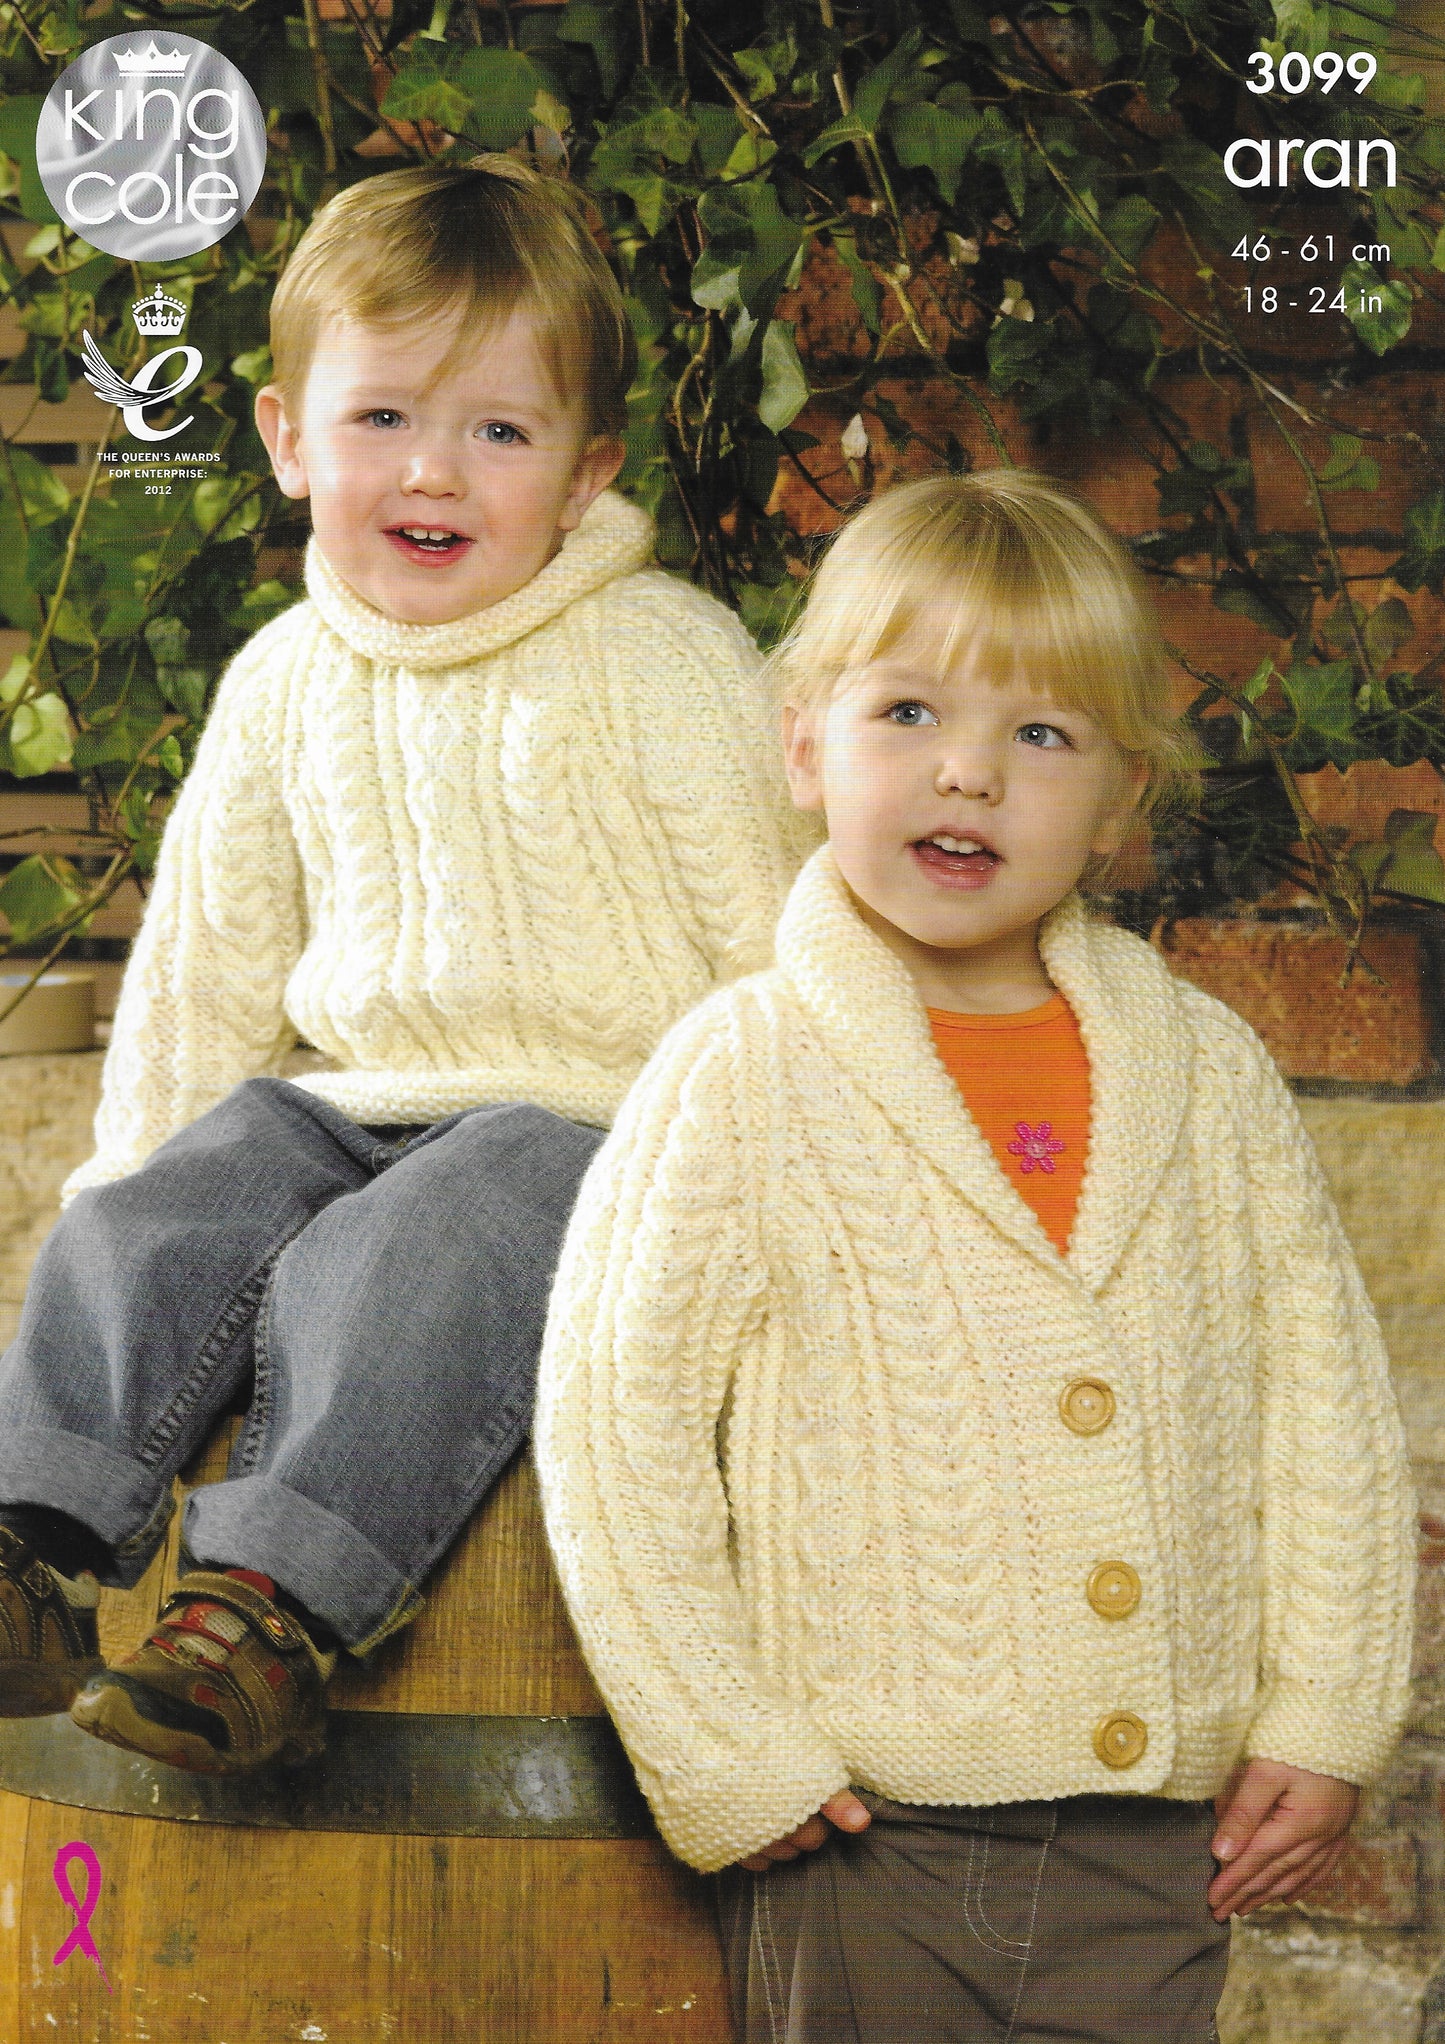 King Cole 3099 Sweater, Jacket & Accessories Aran Knitting Pattern